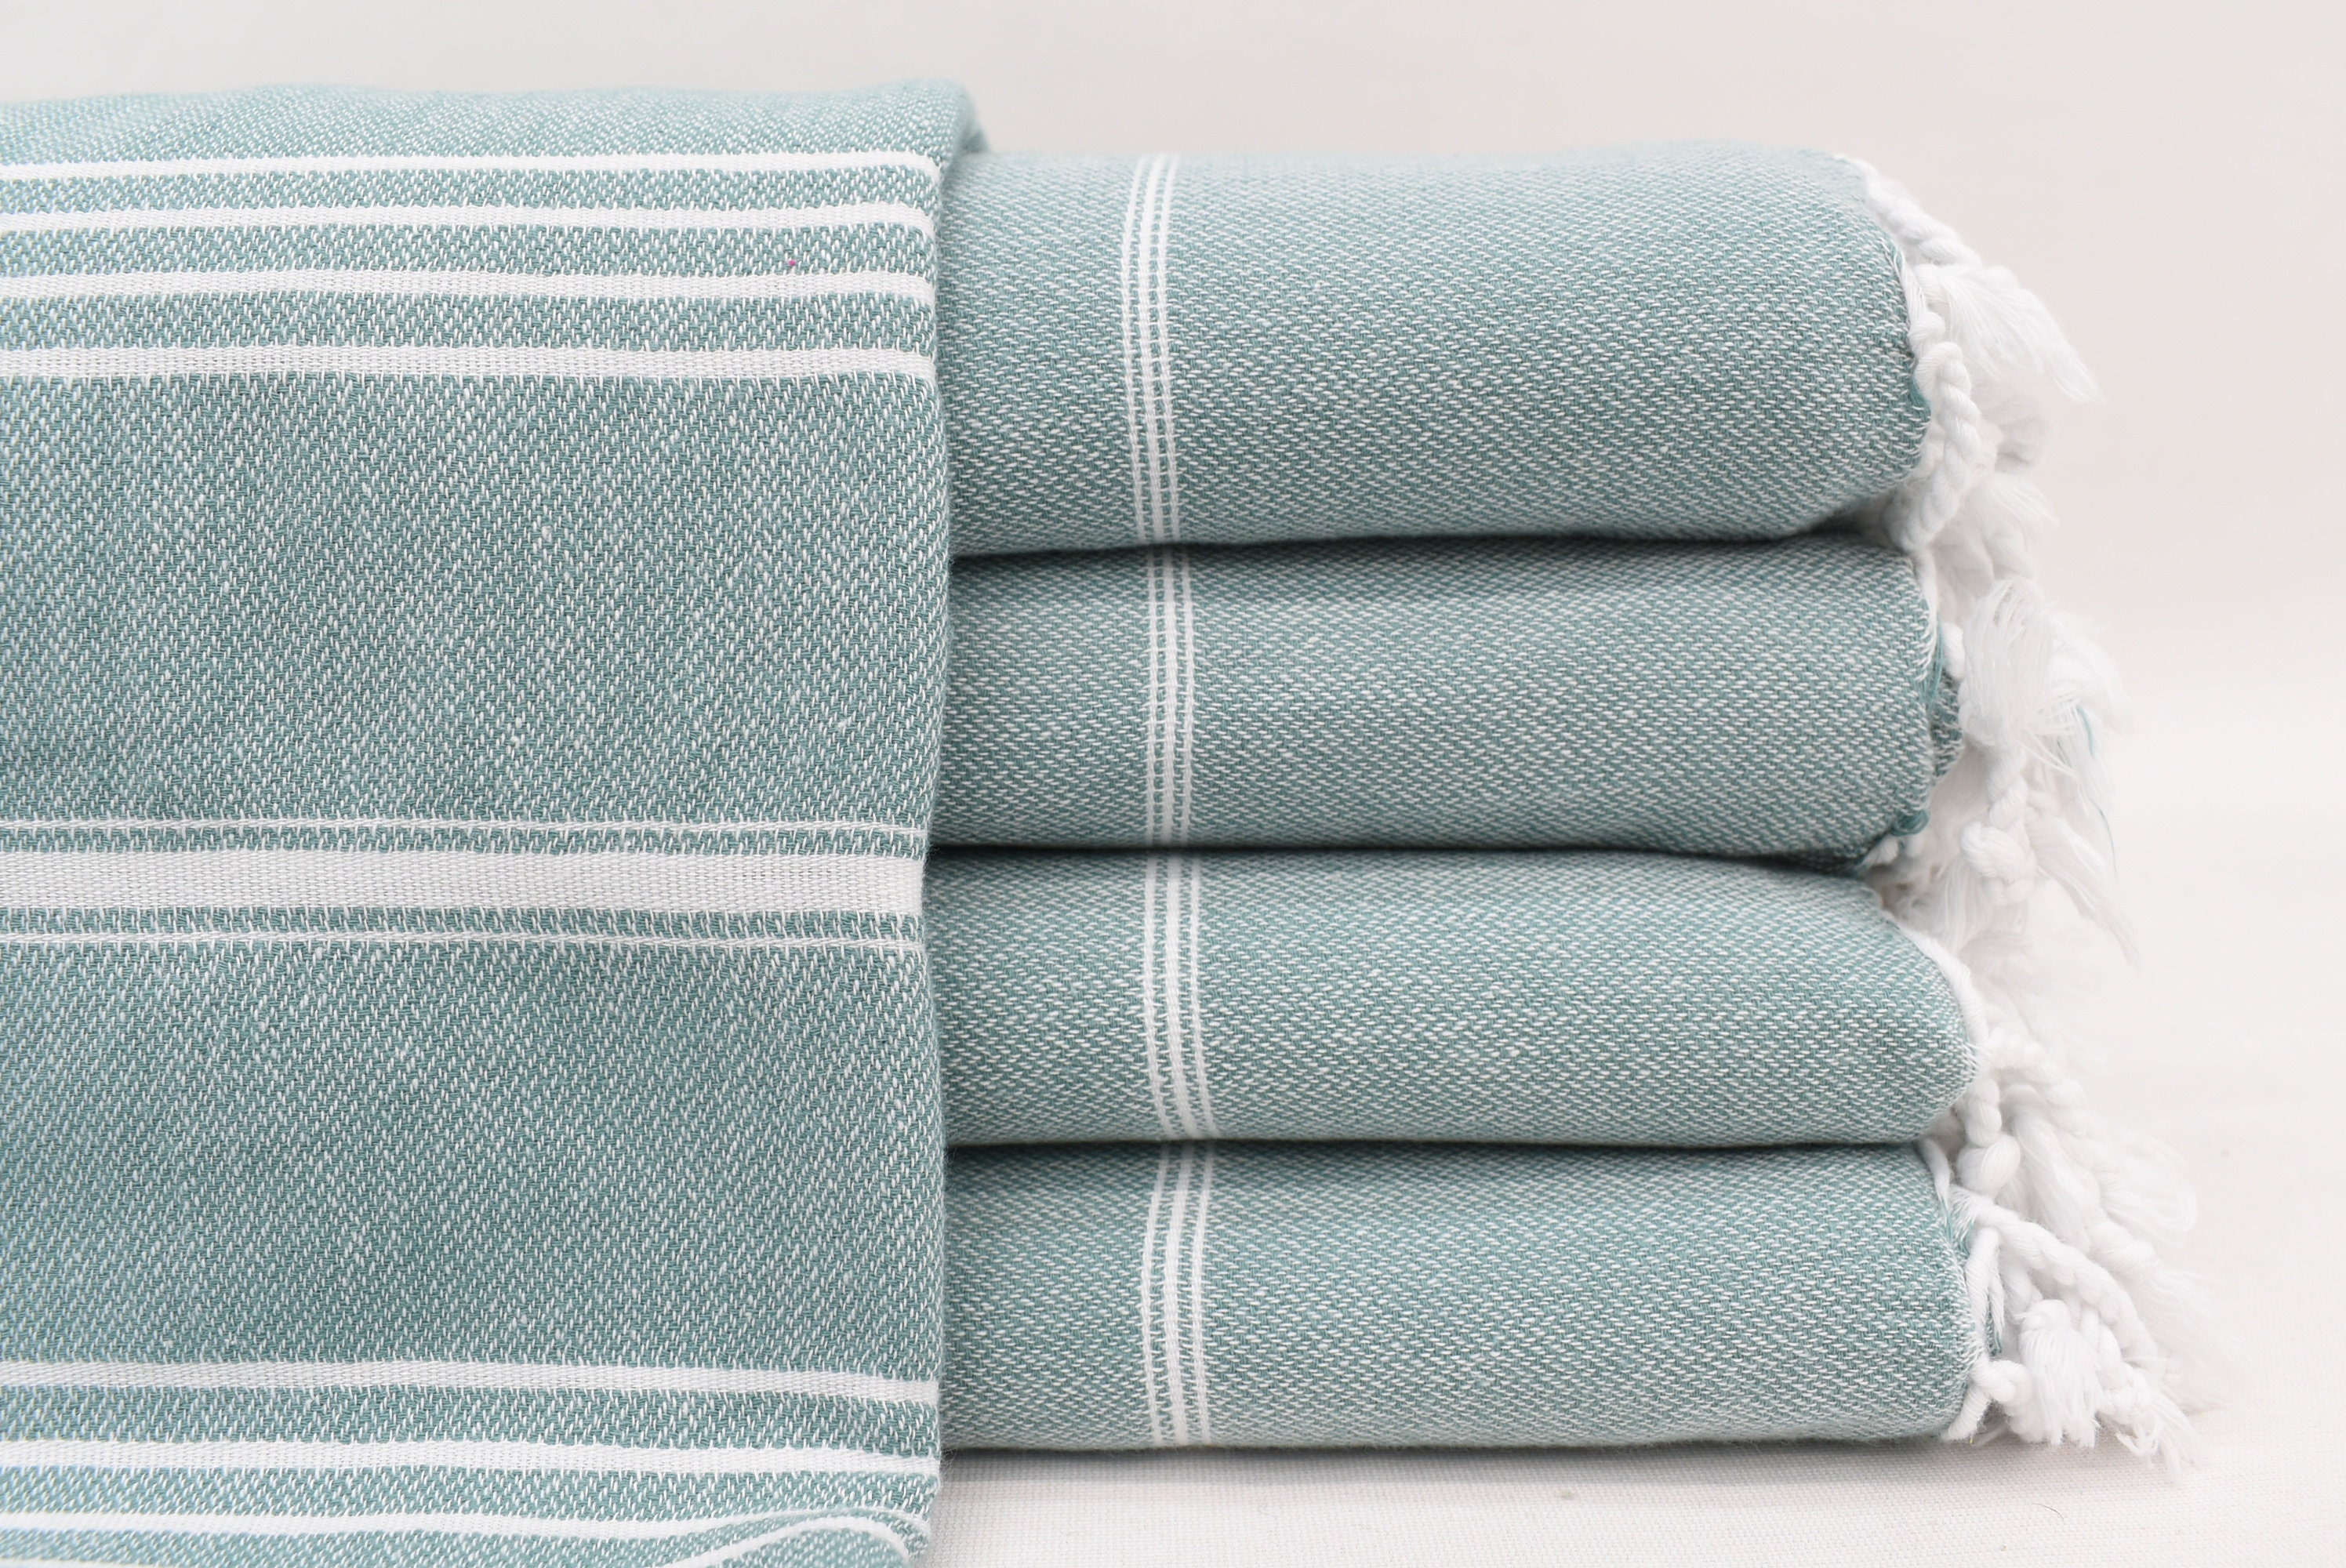 30 Colors / Thick / Diamond / Turkish Towels, Peshtemal, Pool Towels, Beach  Towel, Fouta Towel, Bridesmaid Gift. 